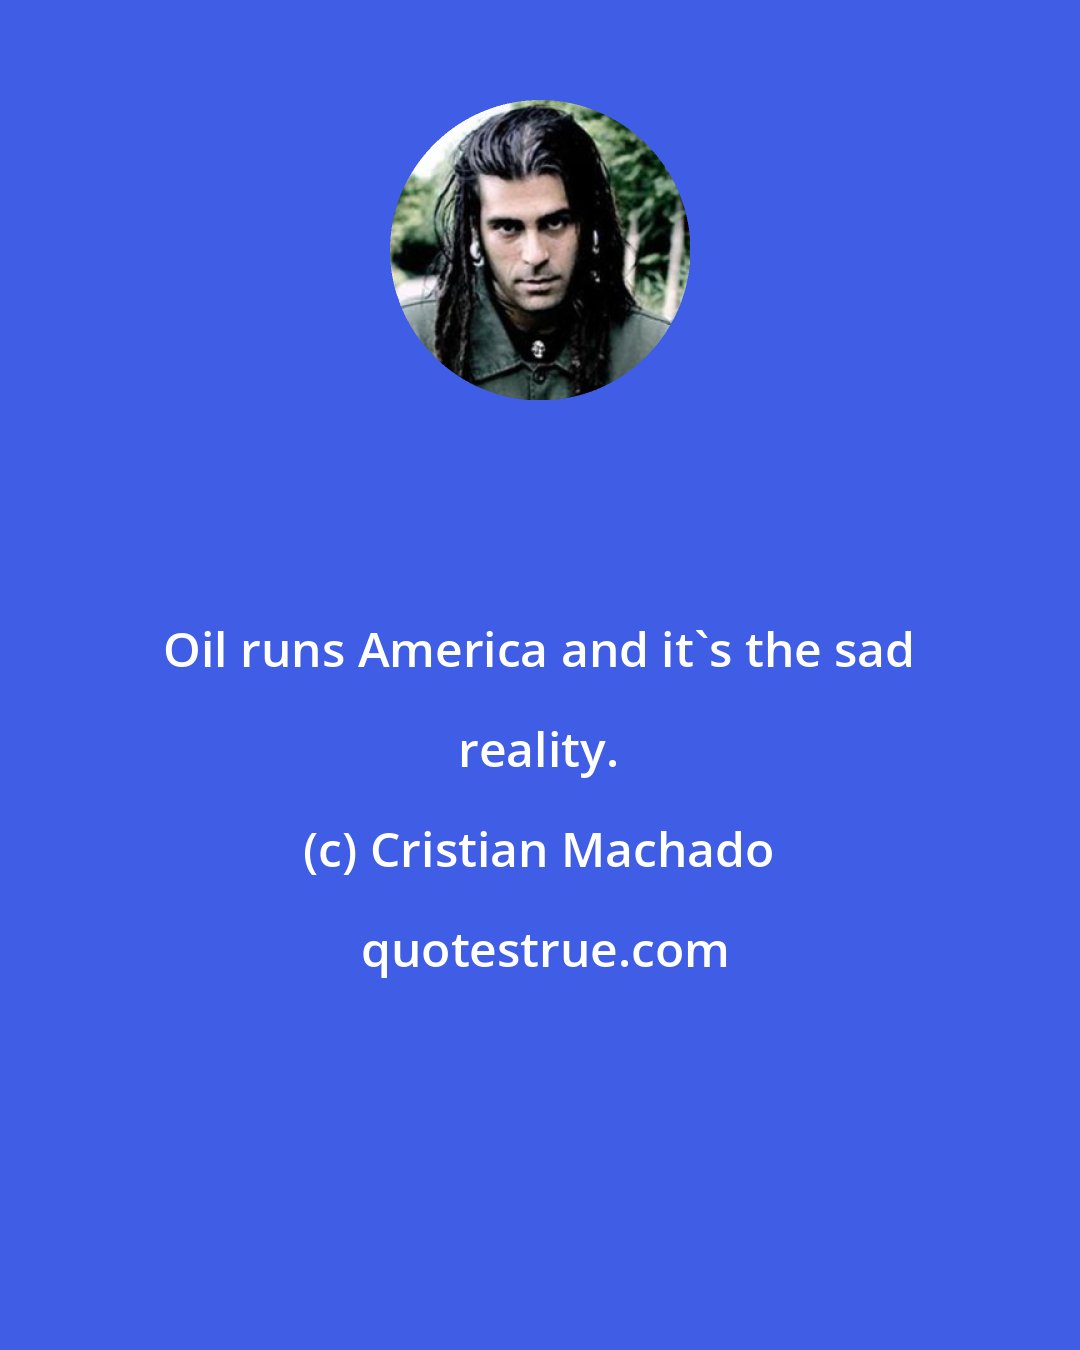 Cristian Machado: Oil runs America and it's the sad reality.